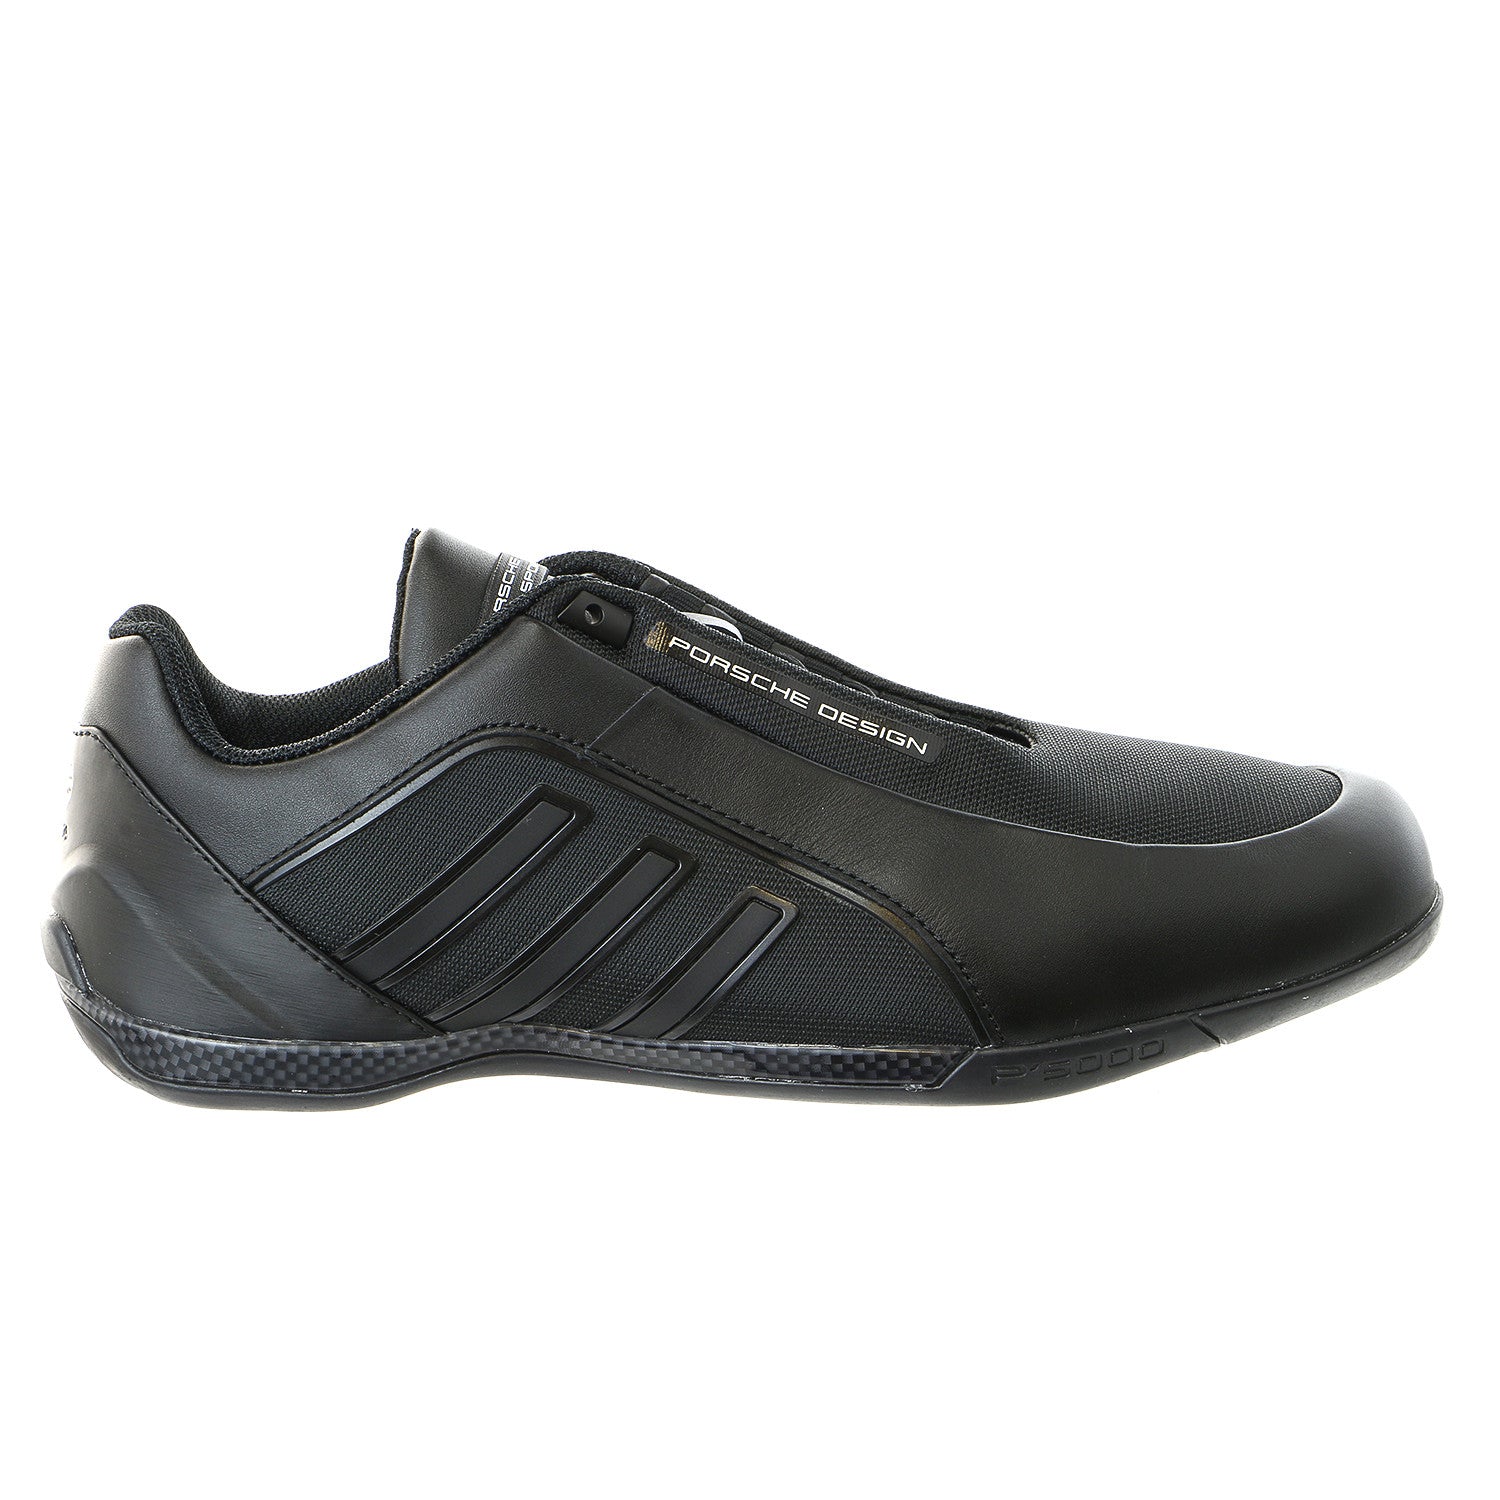 Porsche Design M Athletic Mesh II Fashion Sneaker Driving Shoe - Black ...